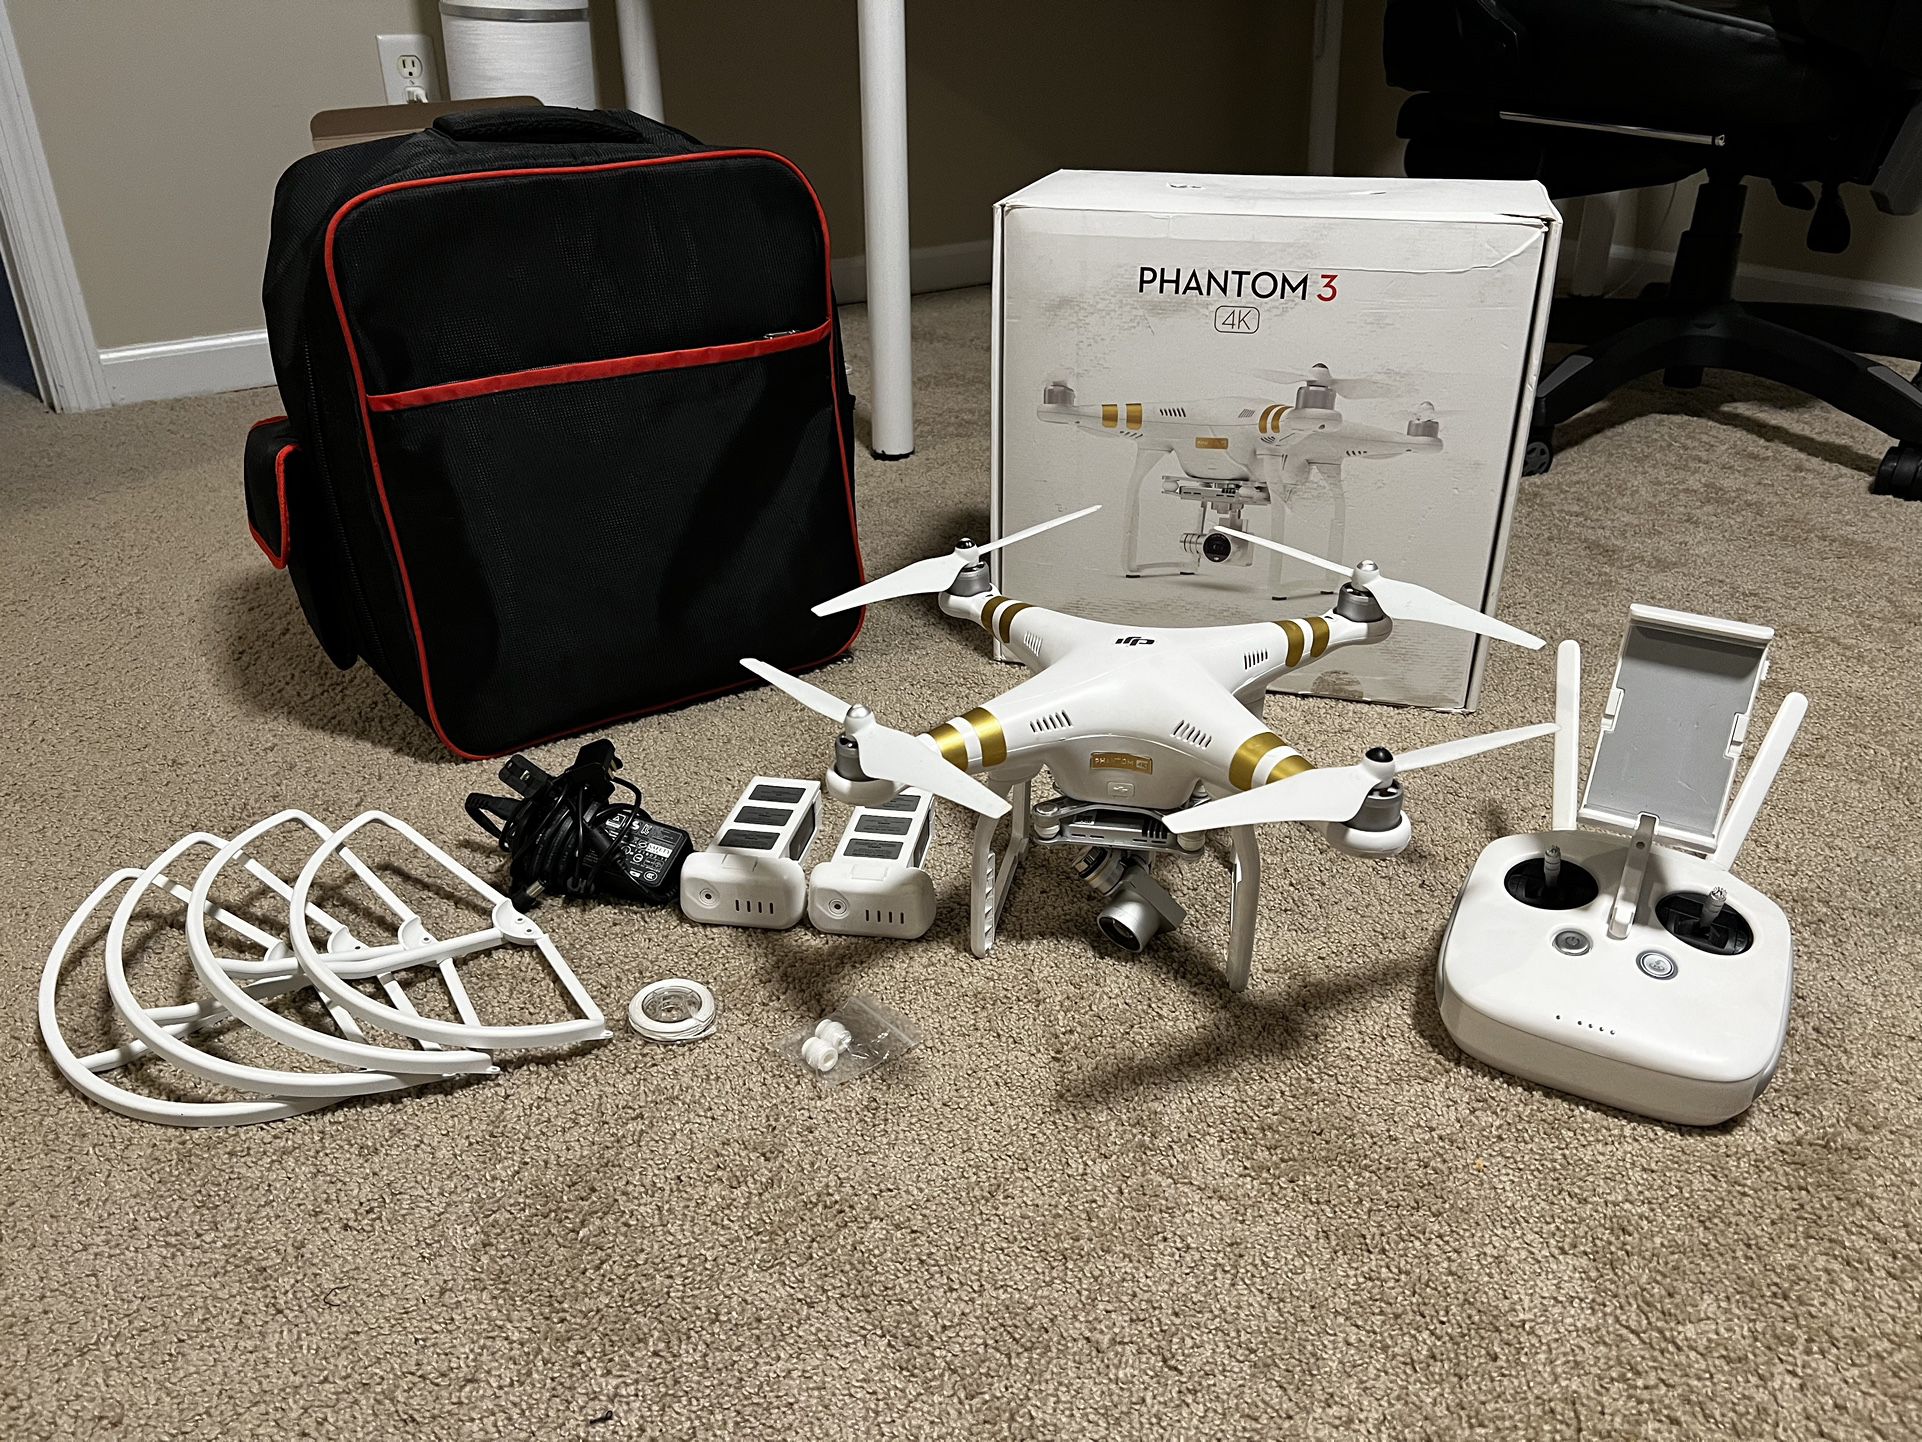 DJI Phantom 3 4k Drone With Camera